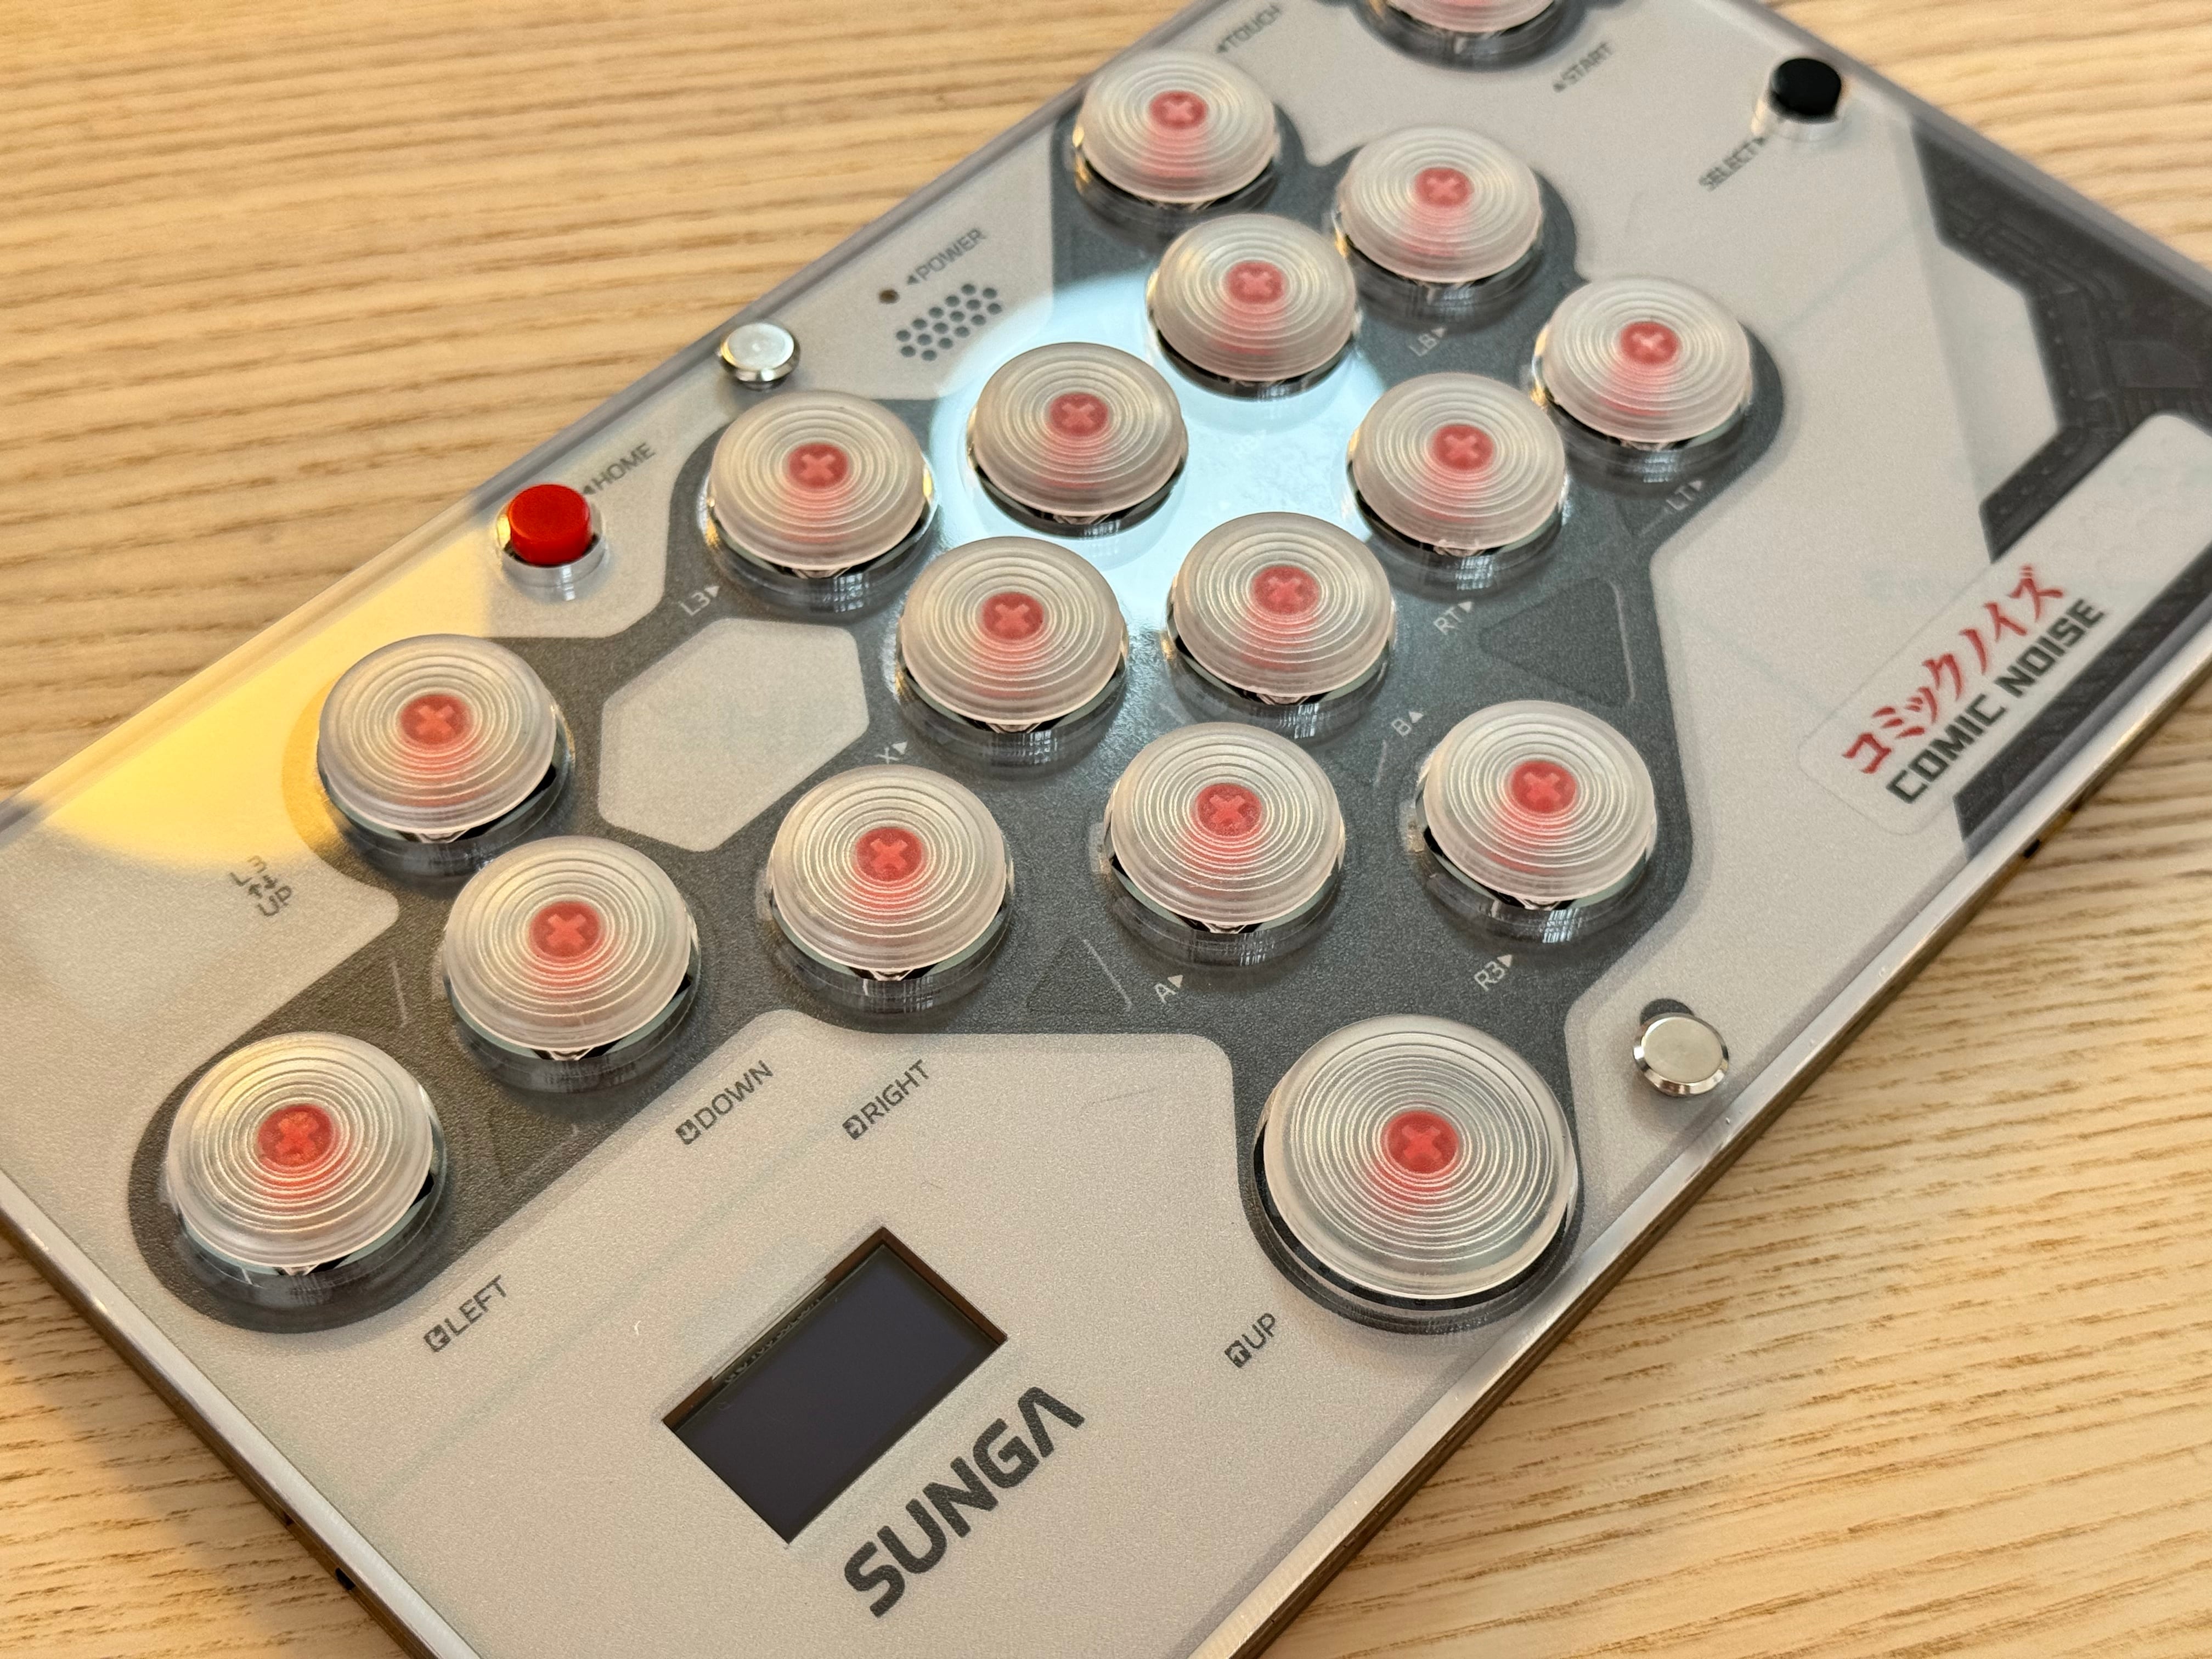 SUNGA レバーレス コントローラー 17ボタン ボタンキャップ変更済み